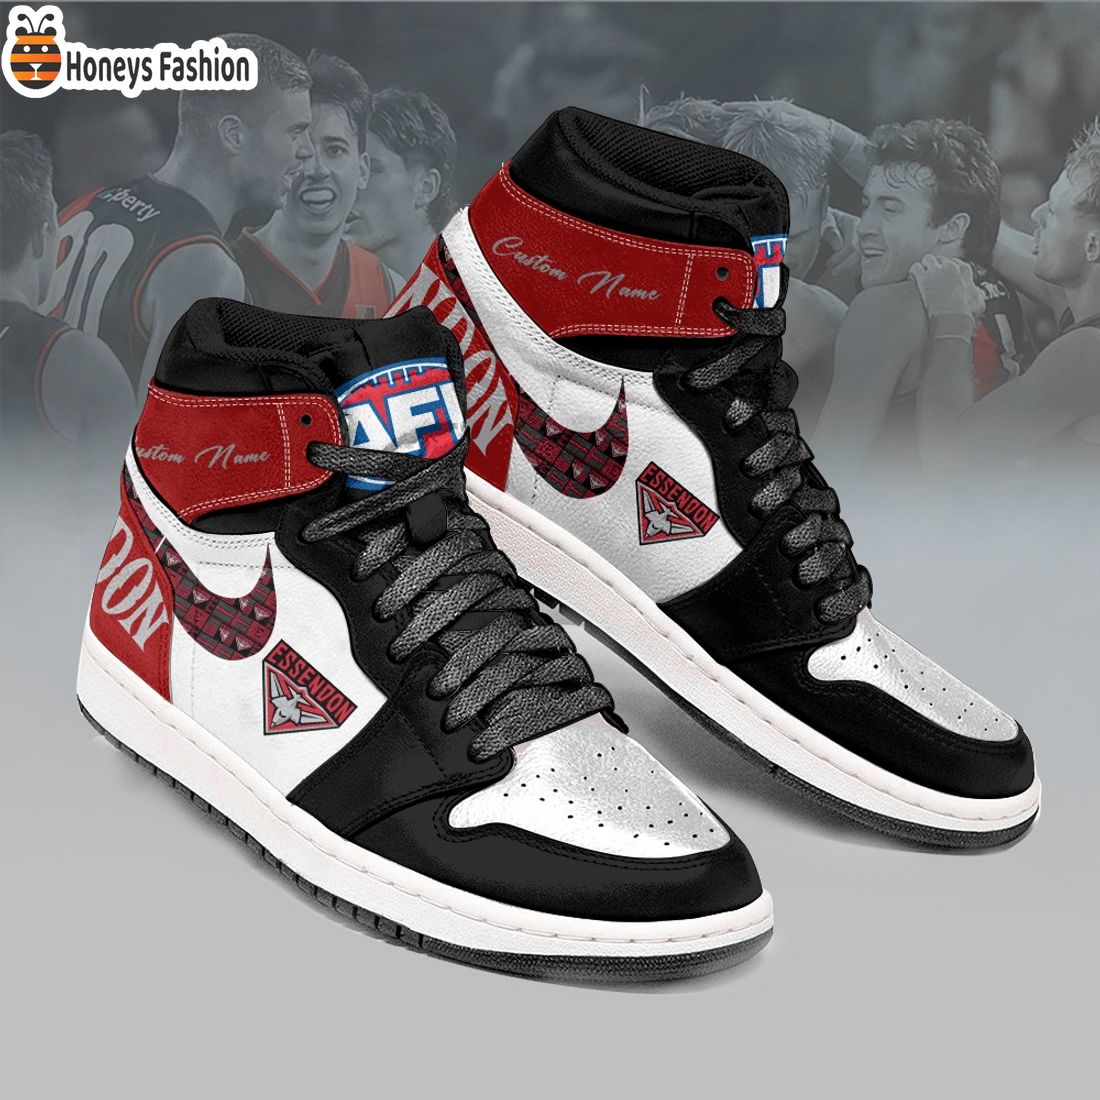 Essendon Bombers Football Club Custom Name Air Jordan 1 Sneaker